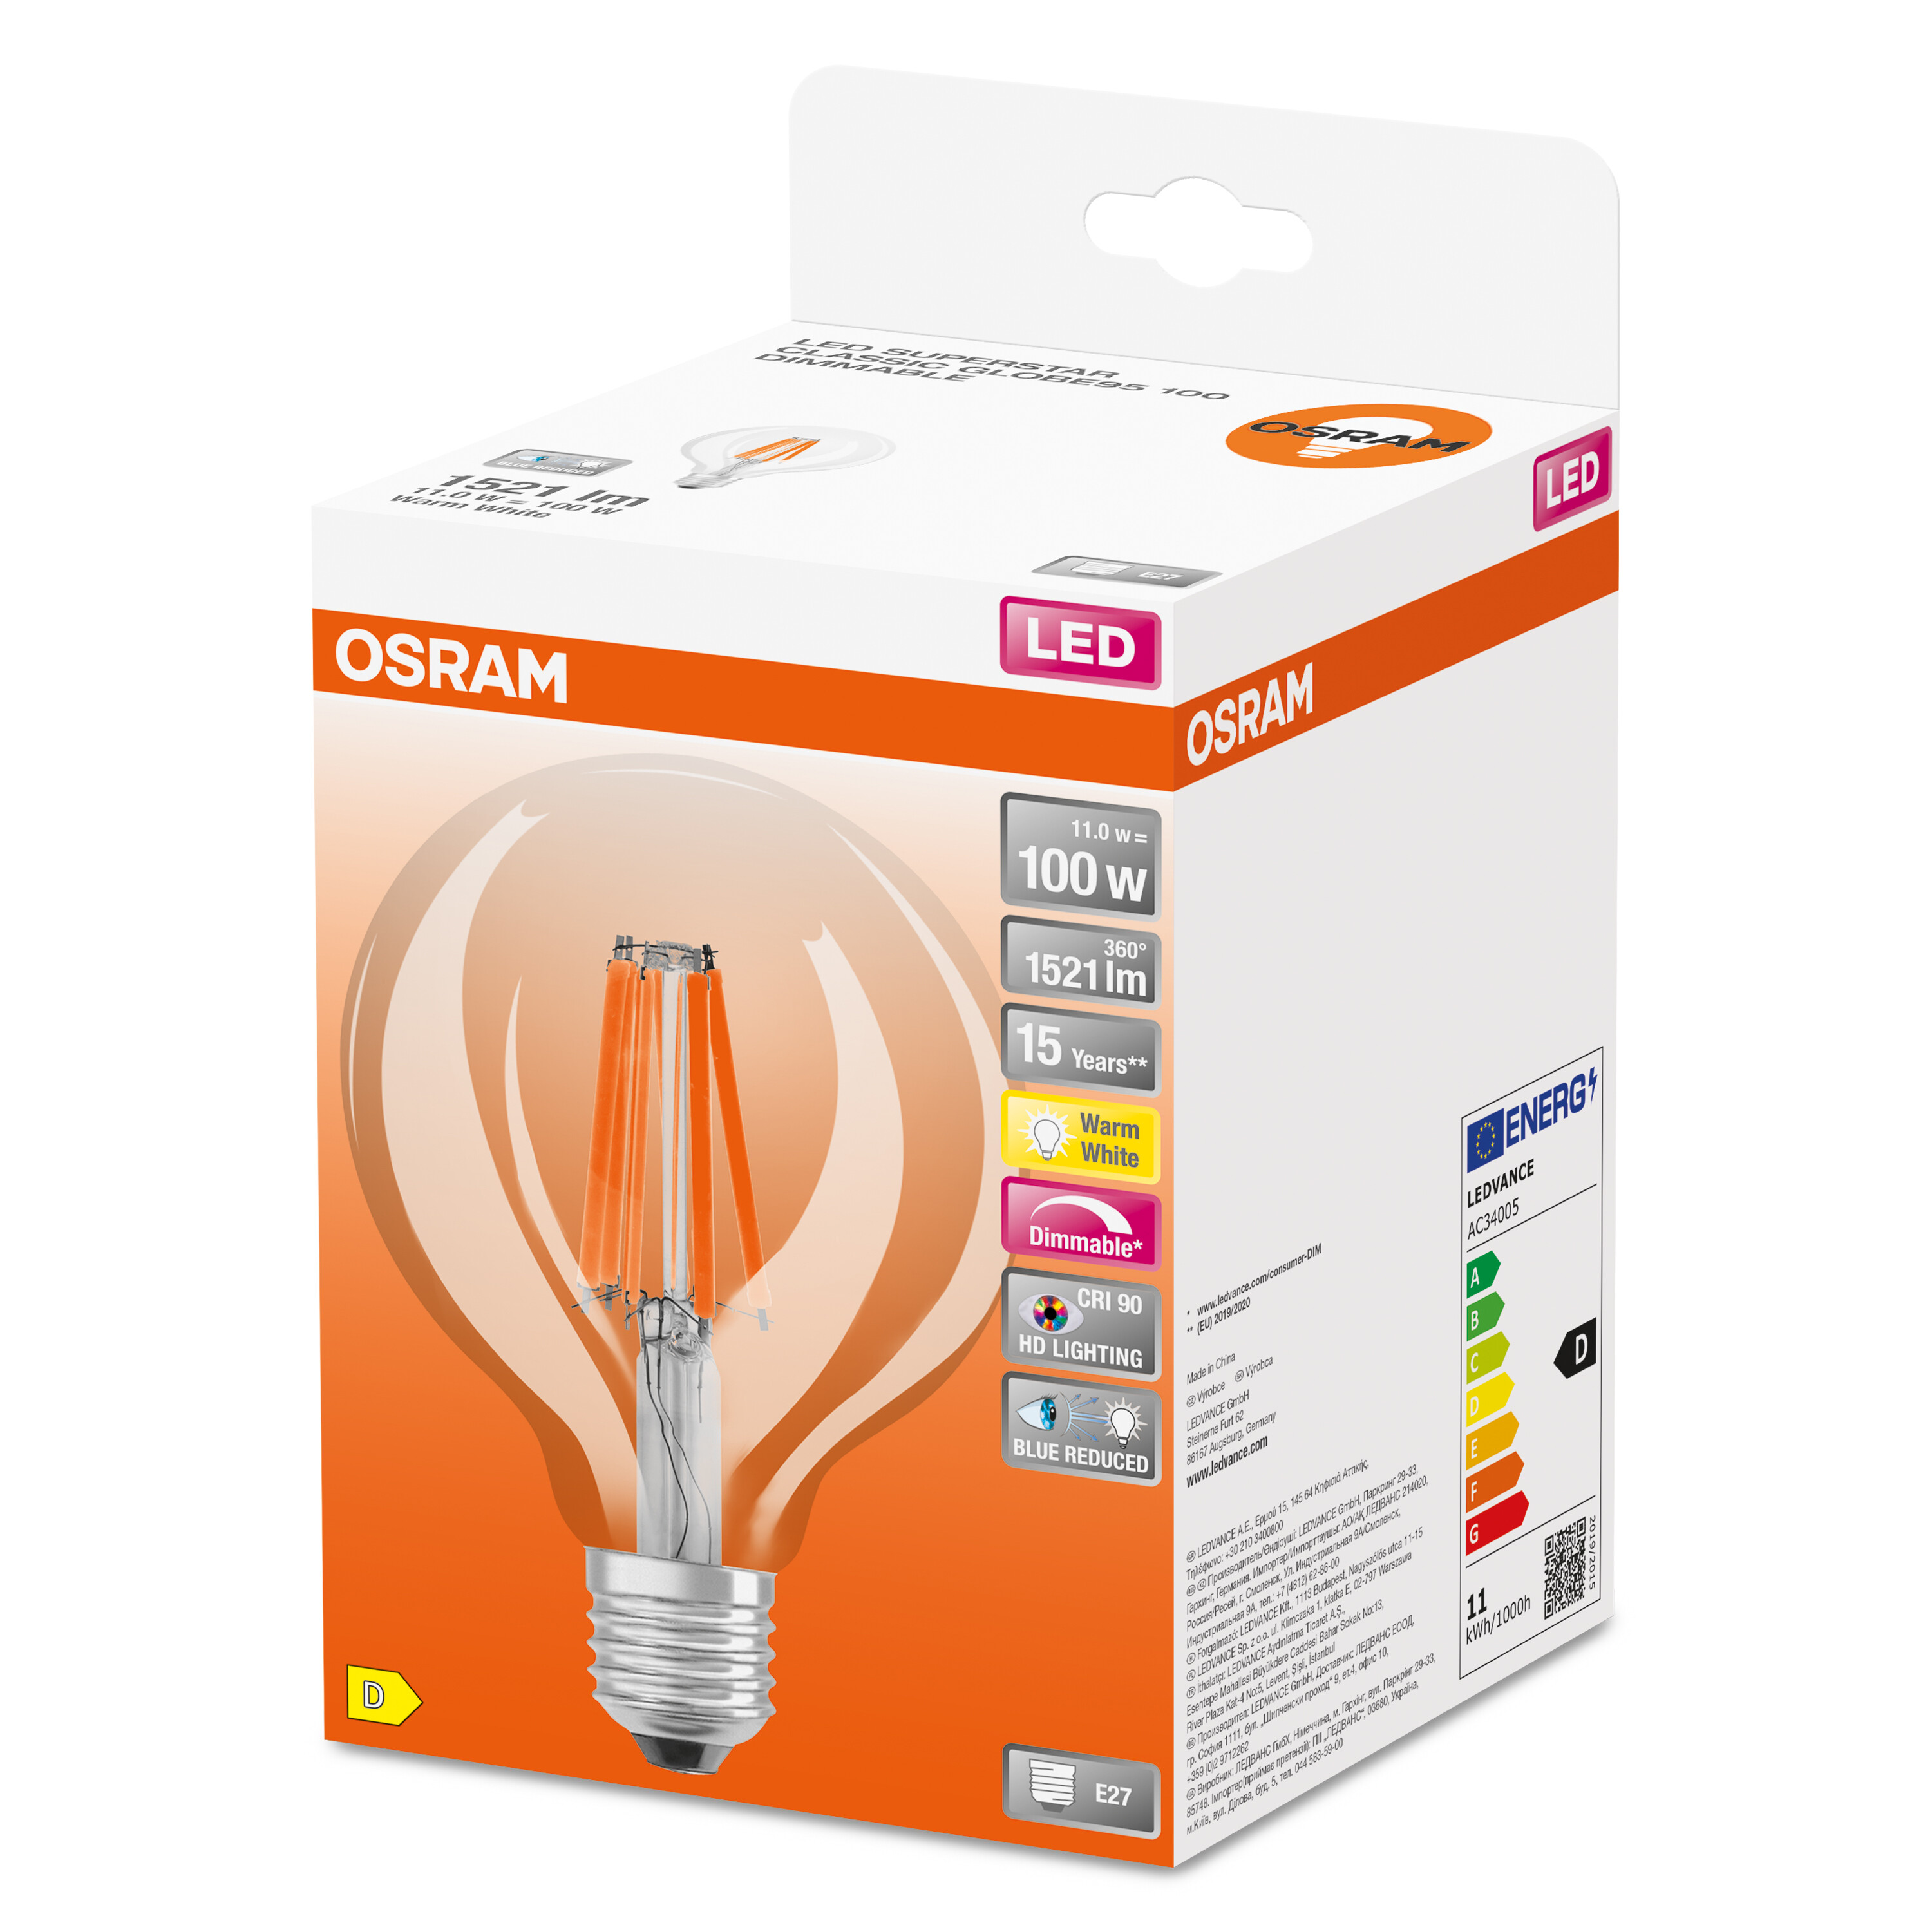 OSRAM  LED SUPERSTAR PLUS LED Warmweiß CLASSIC FILAMENT Lumen 1521 Lampe GLOBE